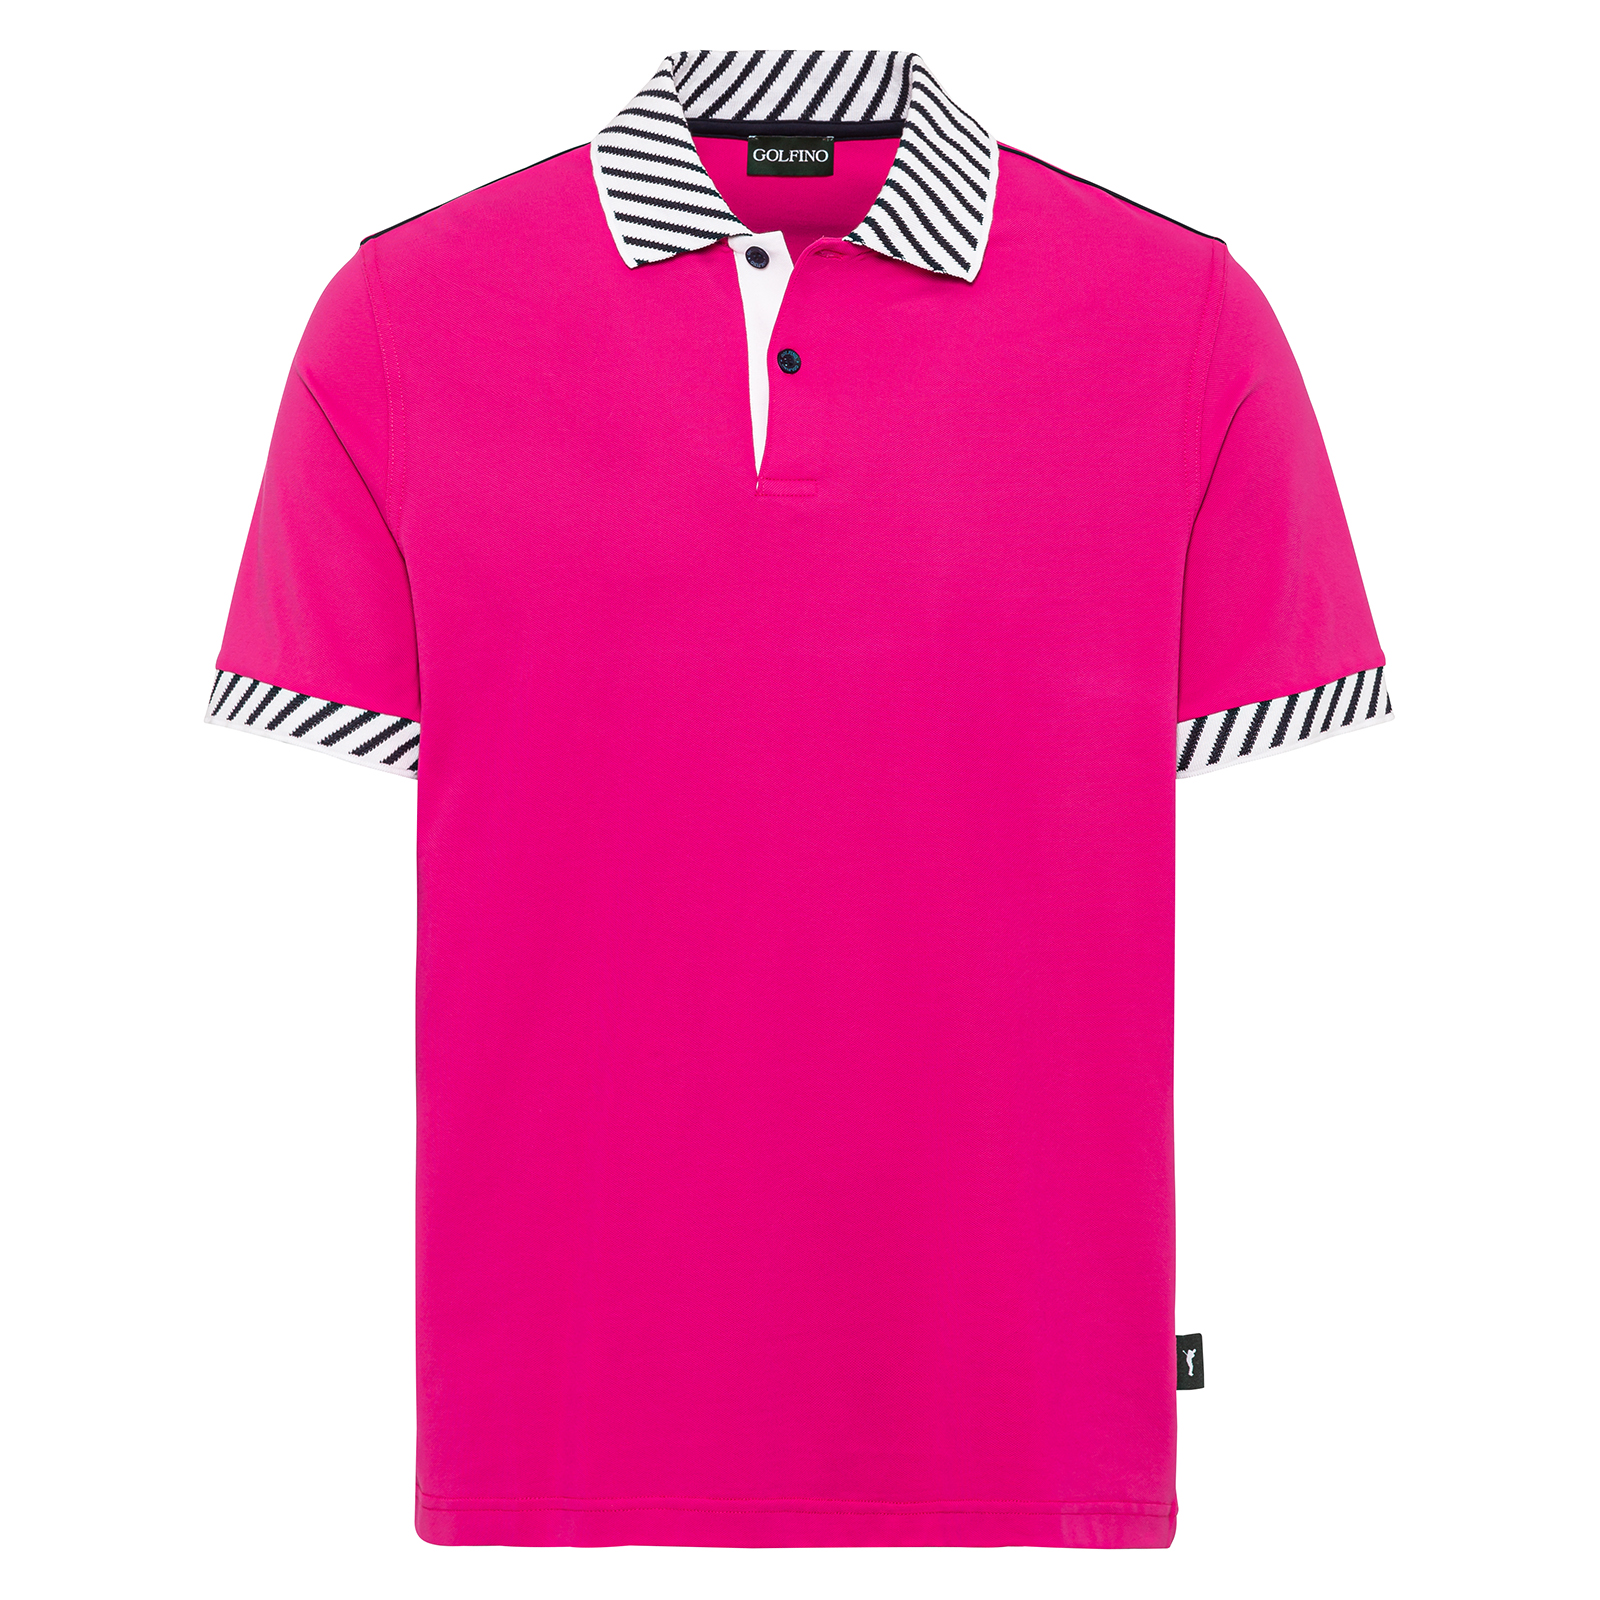 Men's golf polo shirt with sun protection 